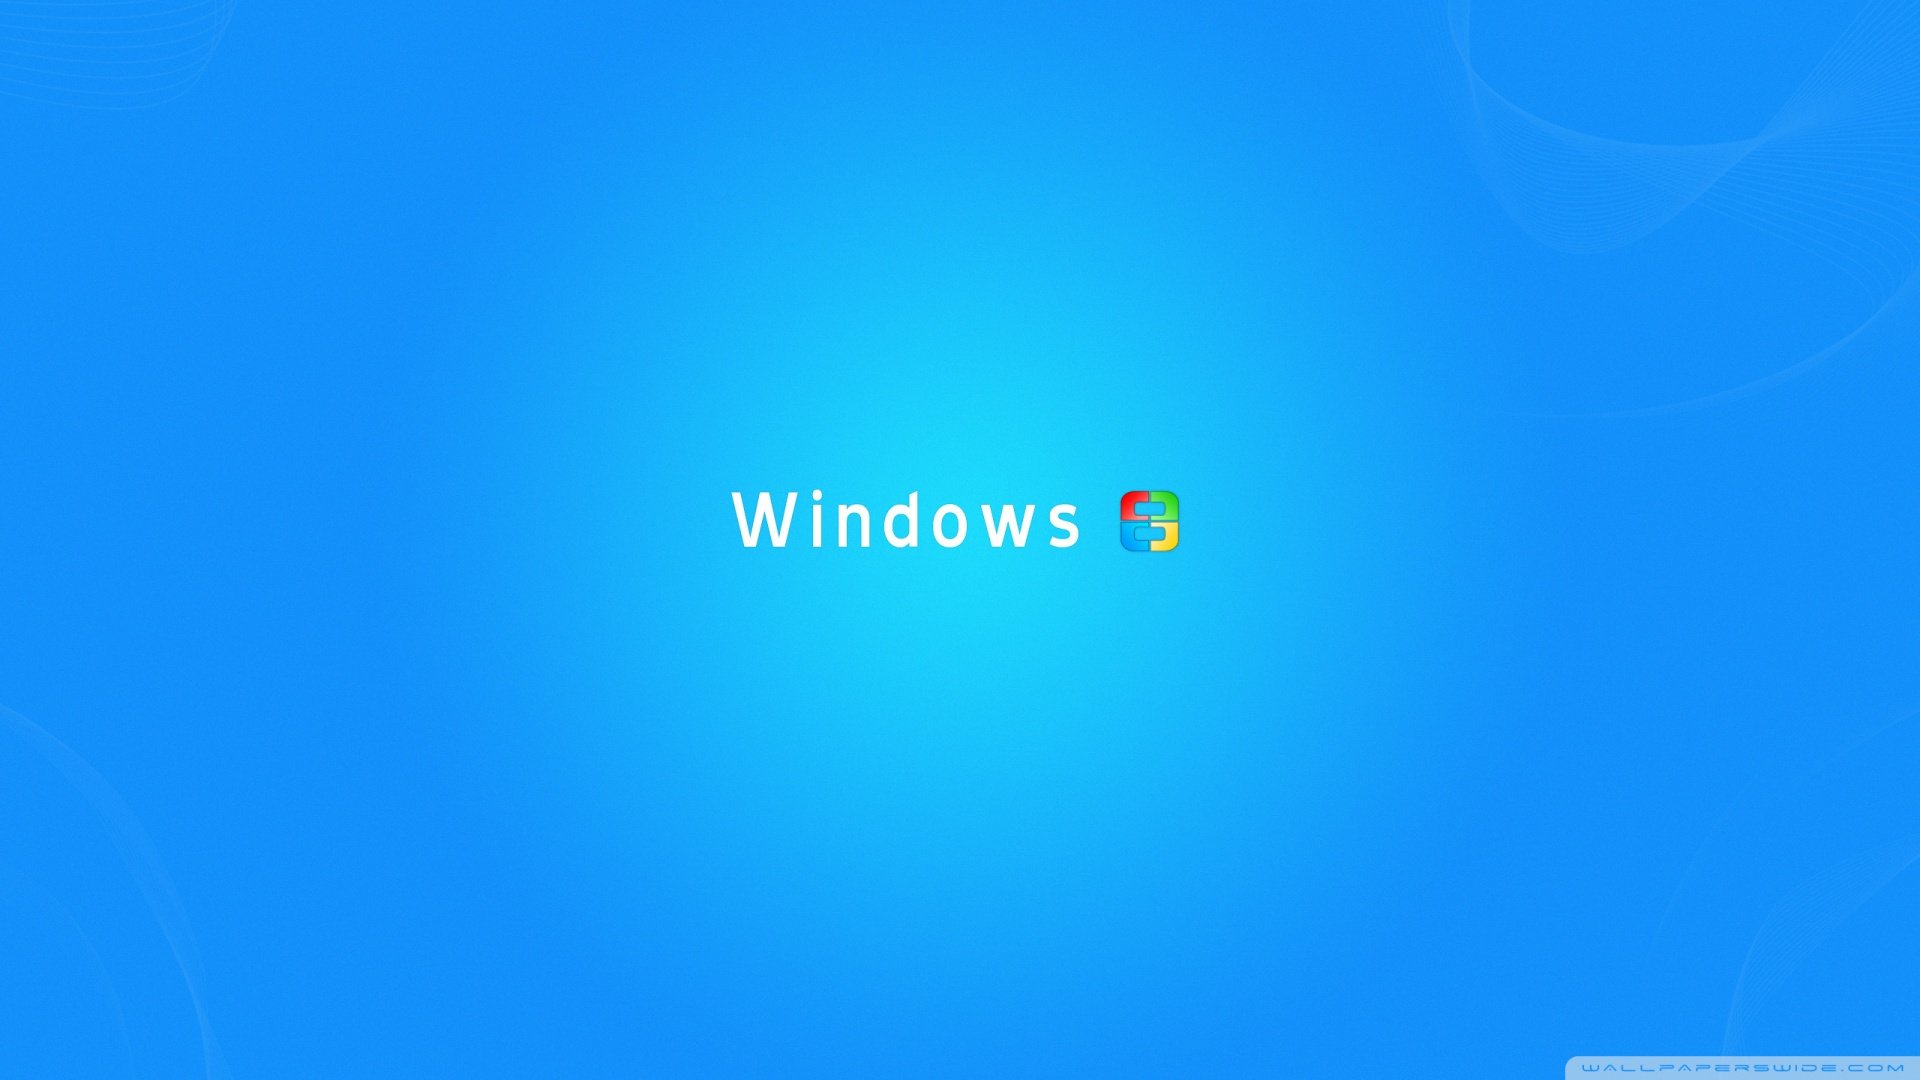 [44+] Windows 8.1 HD Wallpaper 1920x1080 on WallpaperSafari Full Hd Wallpapers For Windows 8 1920x1080